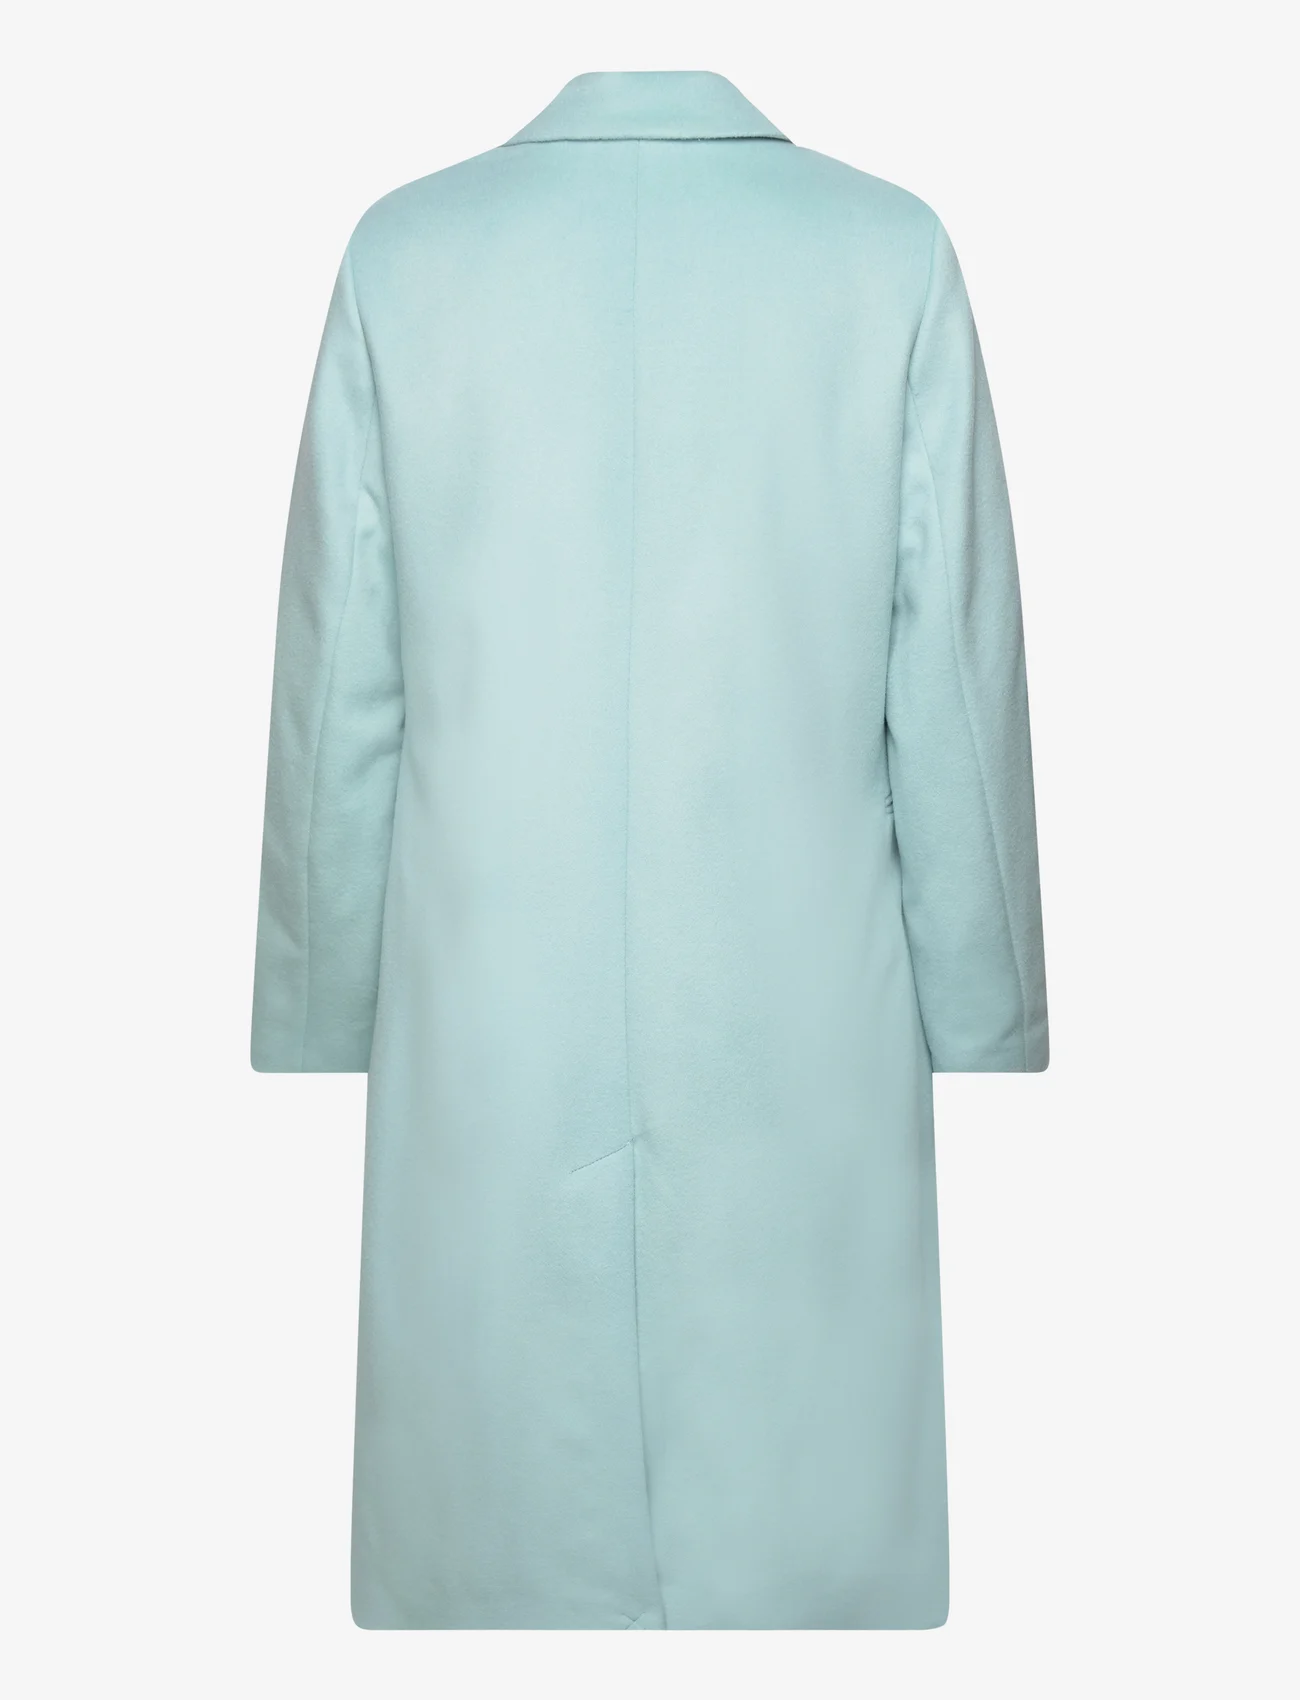 GANT - WOOL BLEND TAILORED COAT - Žieminiai paltai - dusty turquoise - 1